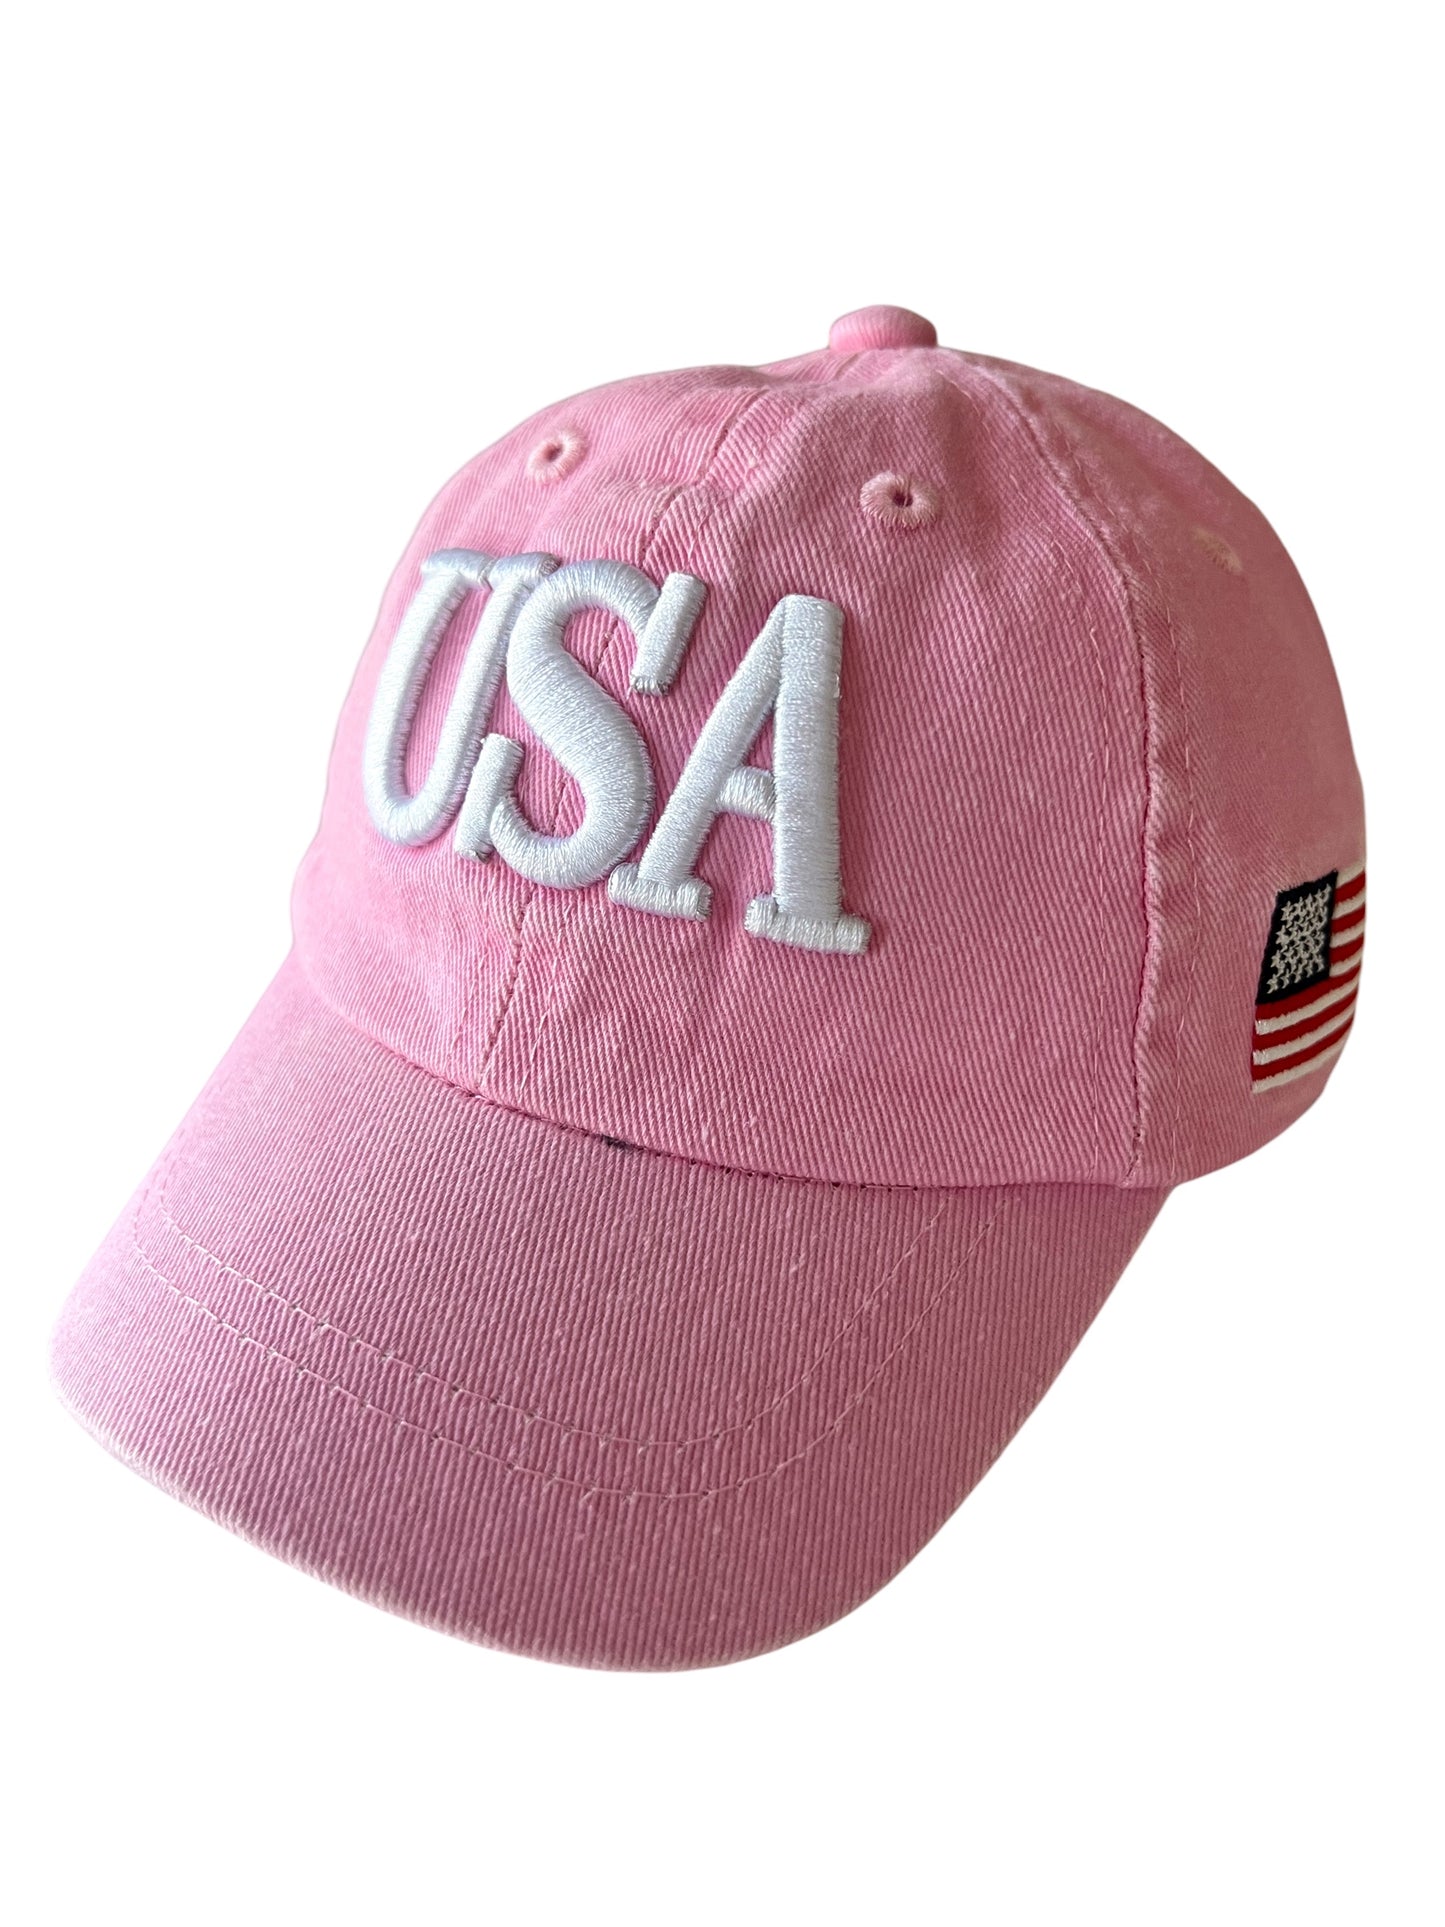 USA Kids Baseball Hat, Vintage Pink